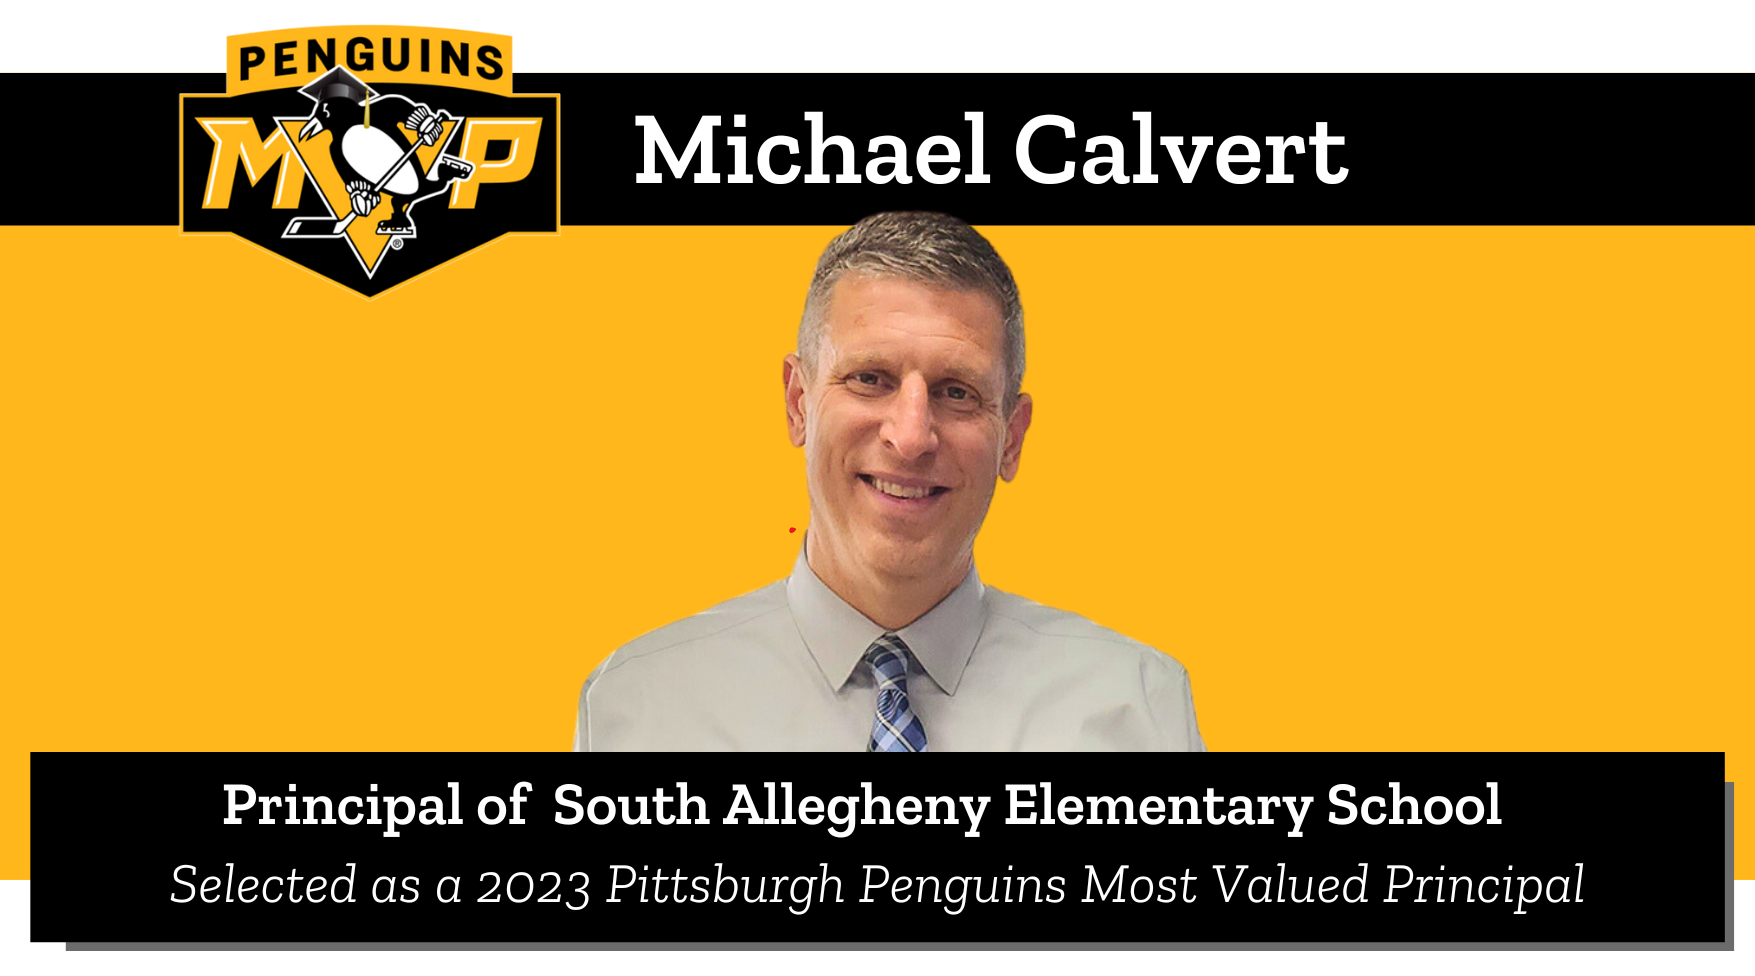 Pens MVP Michael Calvert, Principal of South Allegheny Elementary School